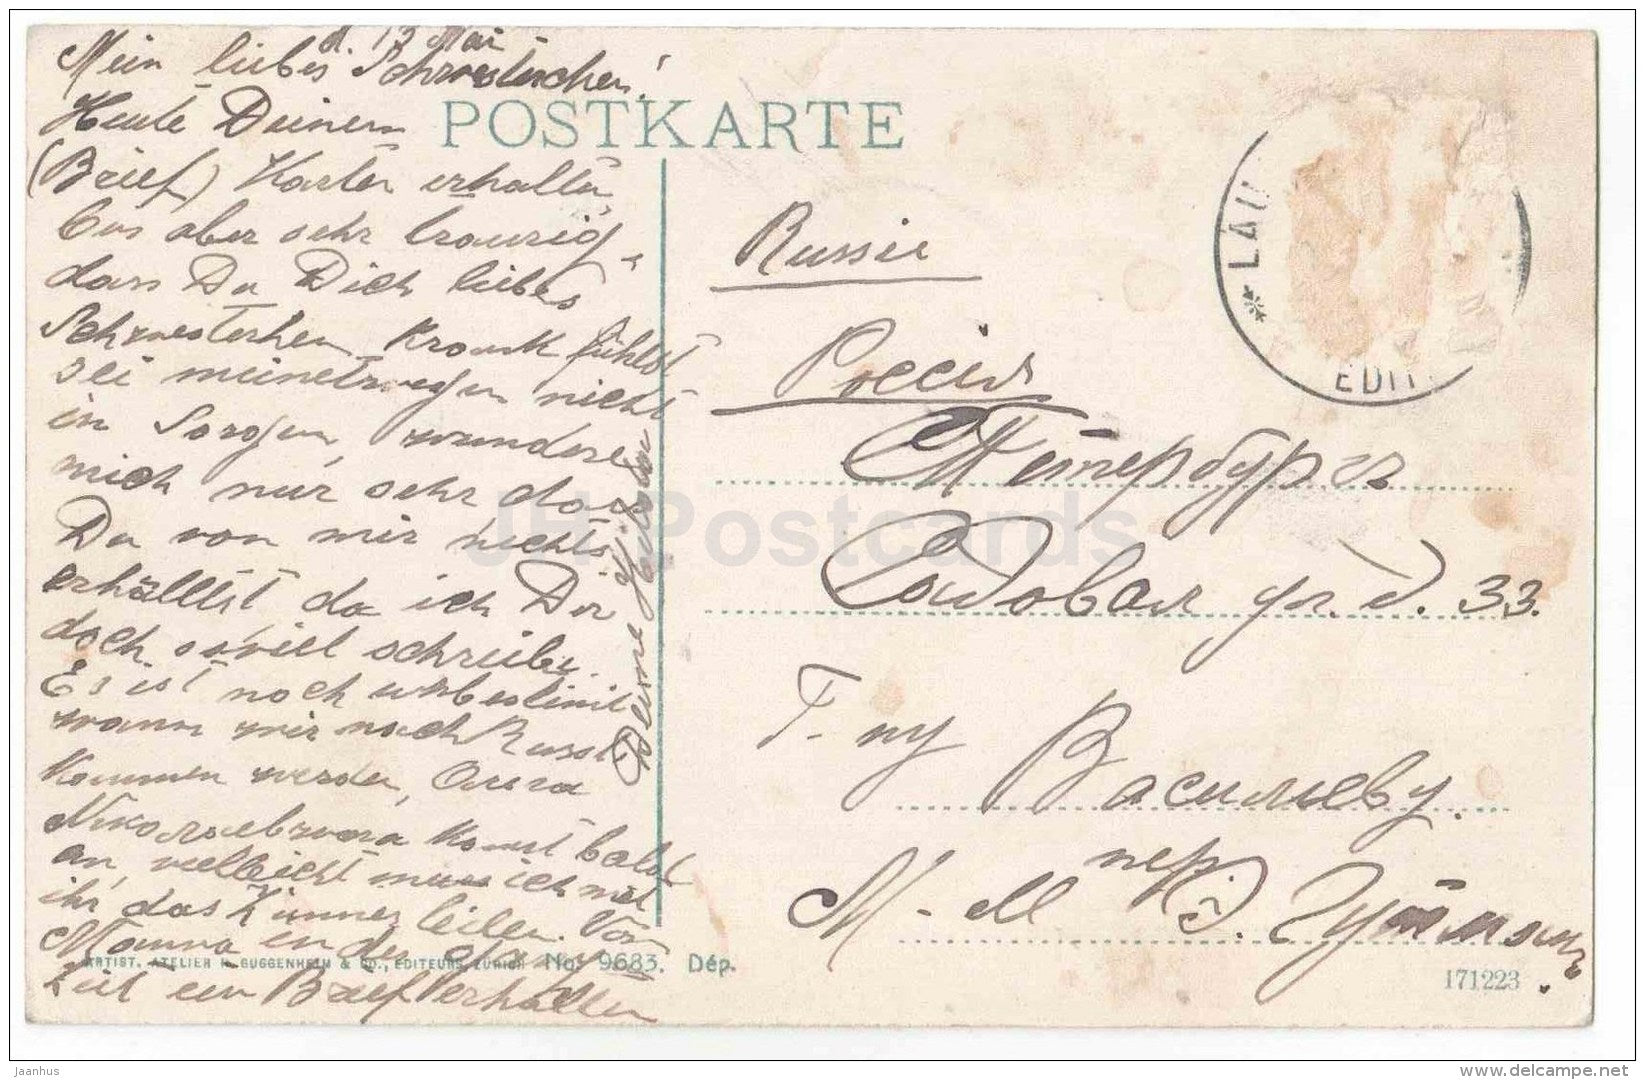 Village Suisse - Lausanne - 9683 - Switzerland - sent from Switzerland Lausanne to Tsarist Russia St. Petersburg 1900s - JH Postcards